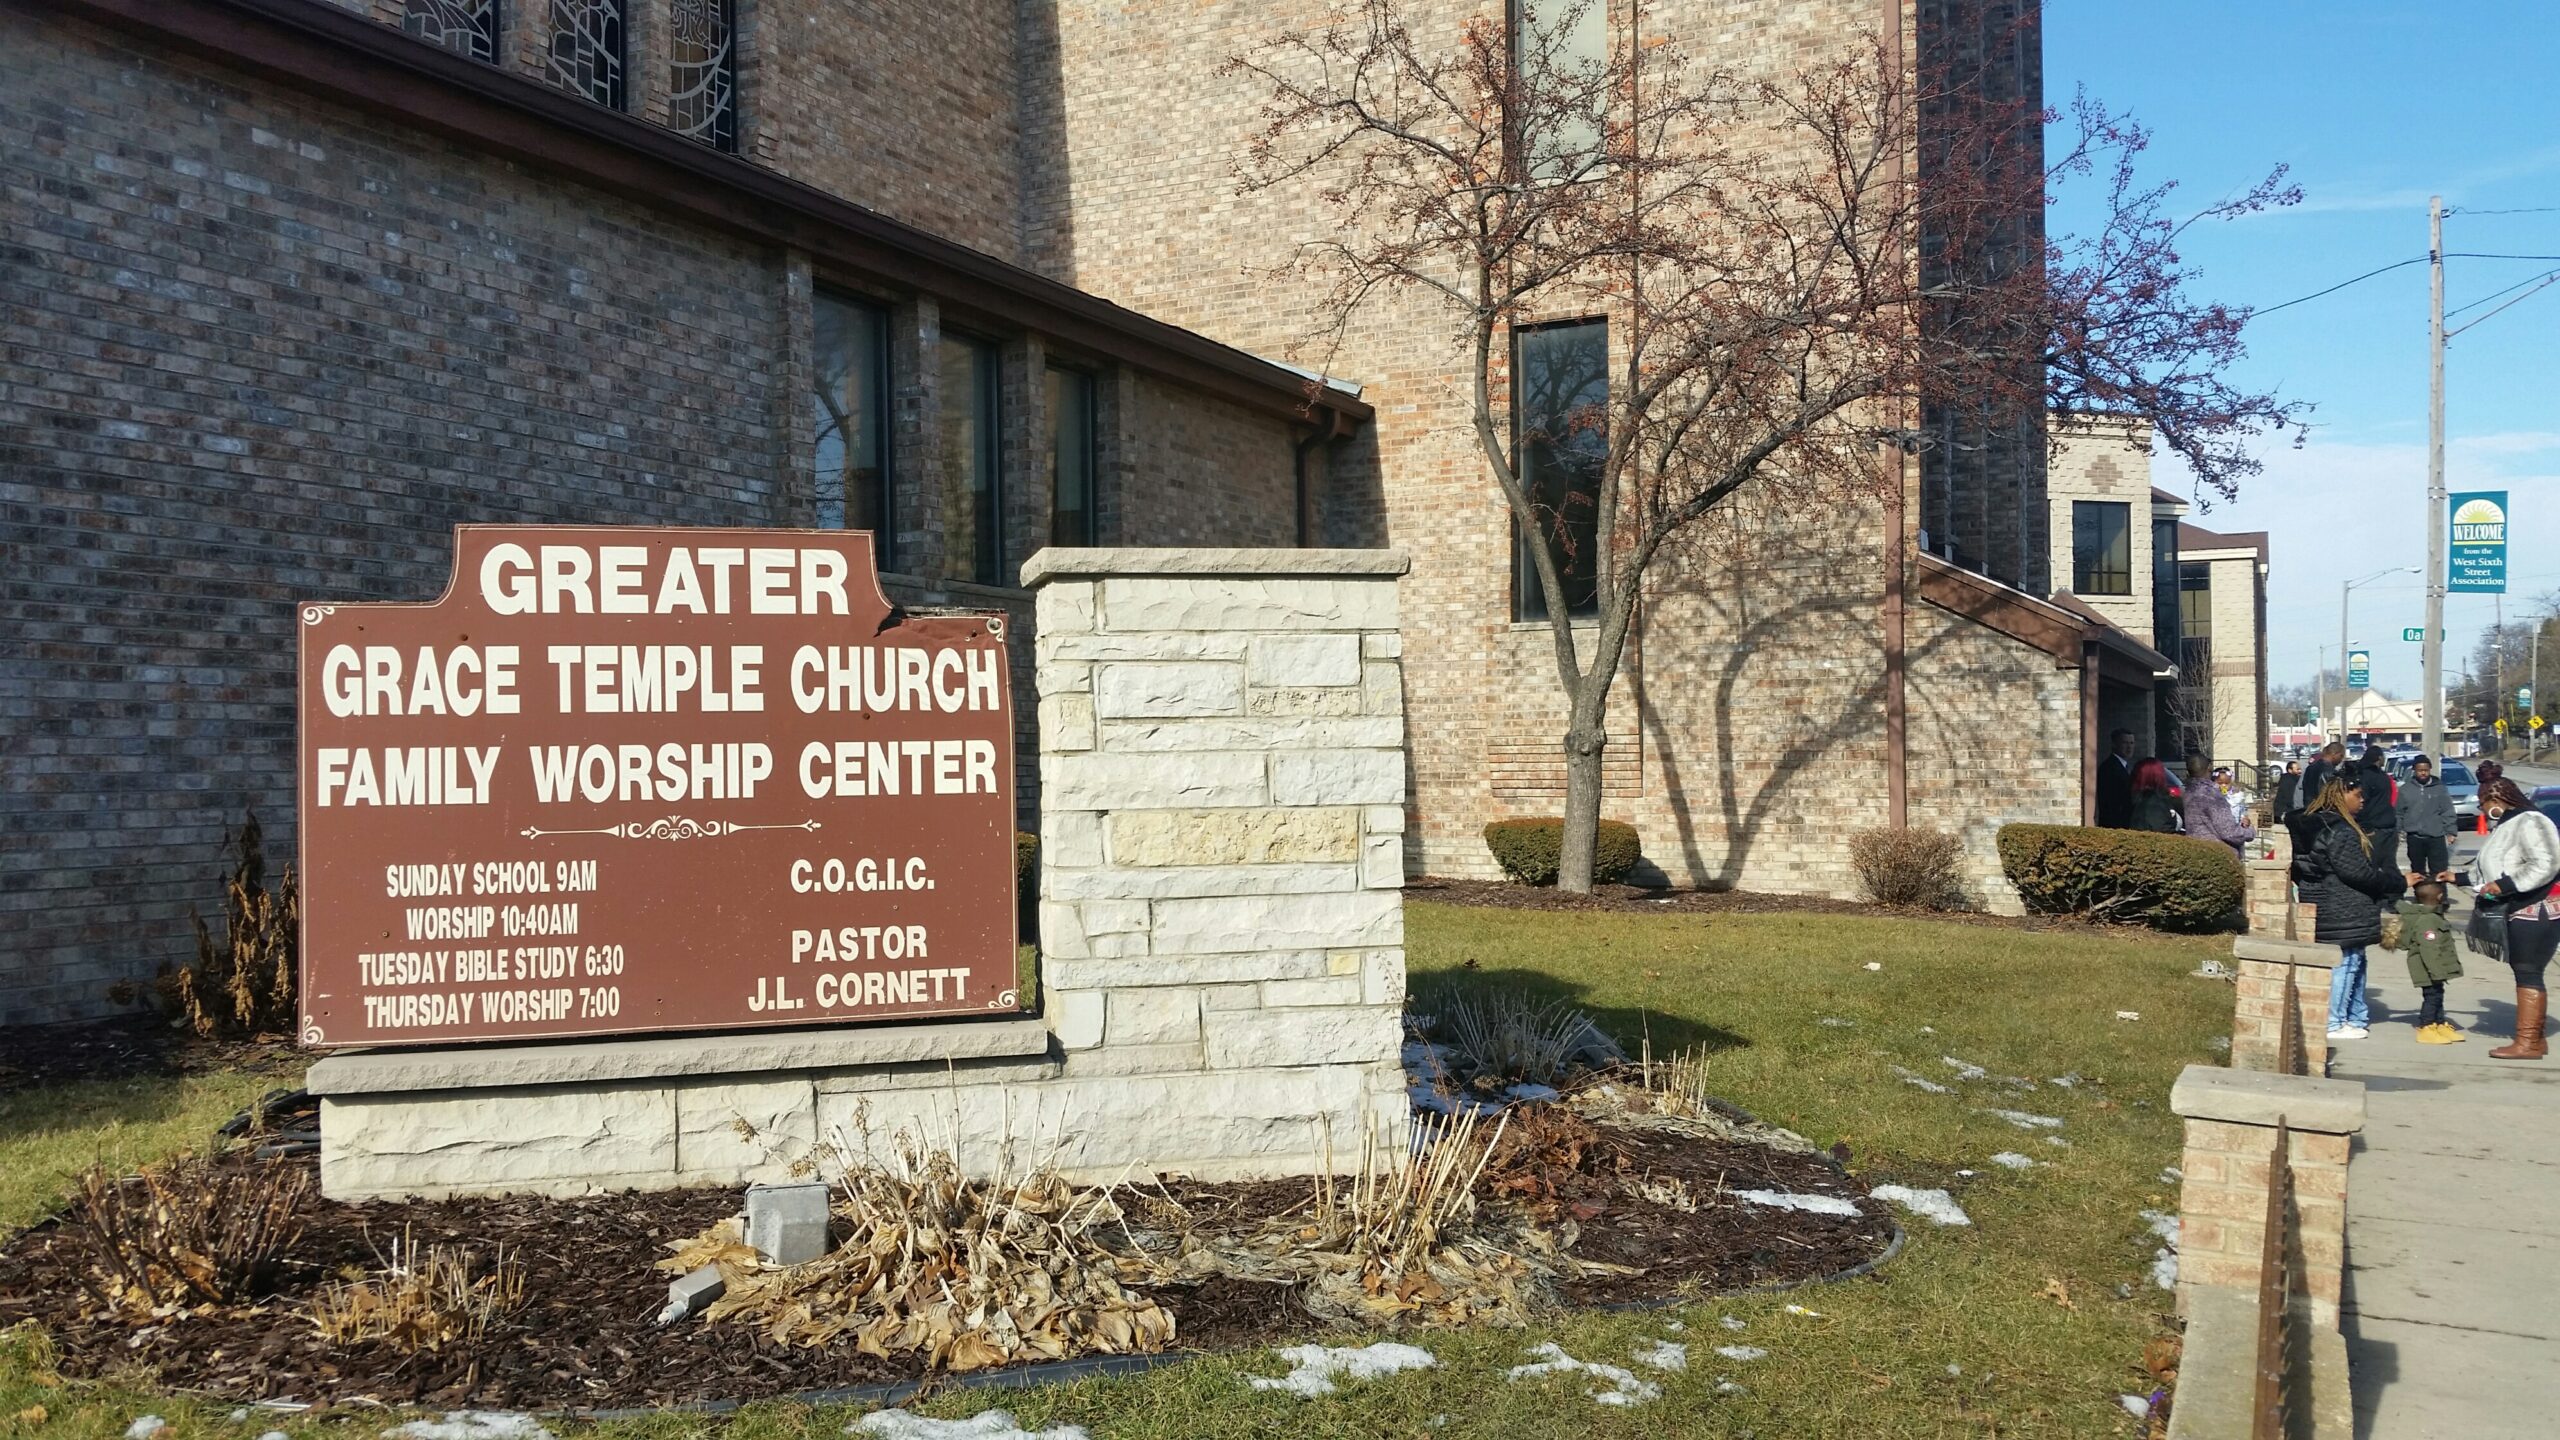 Greater Grace Temple Church in Racine